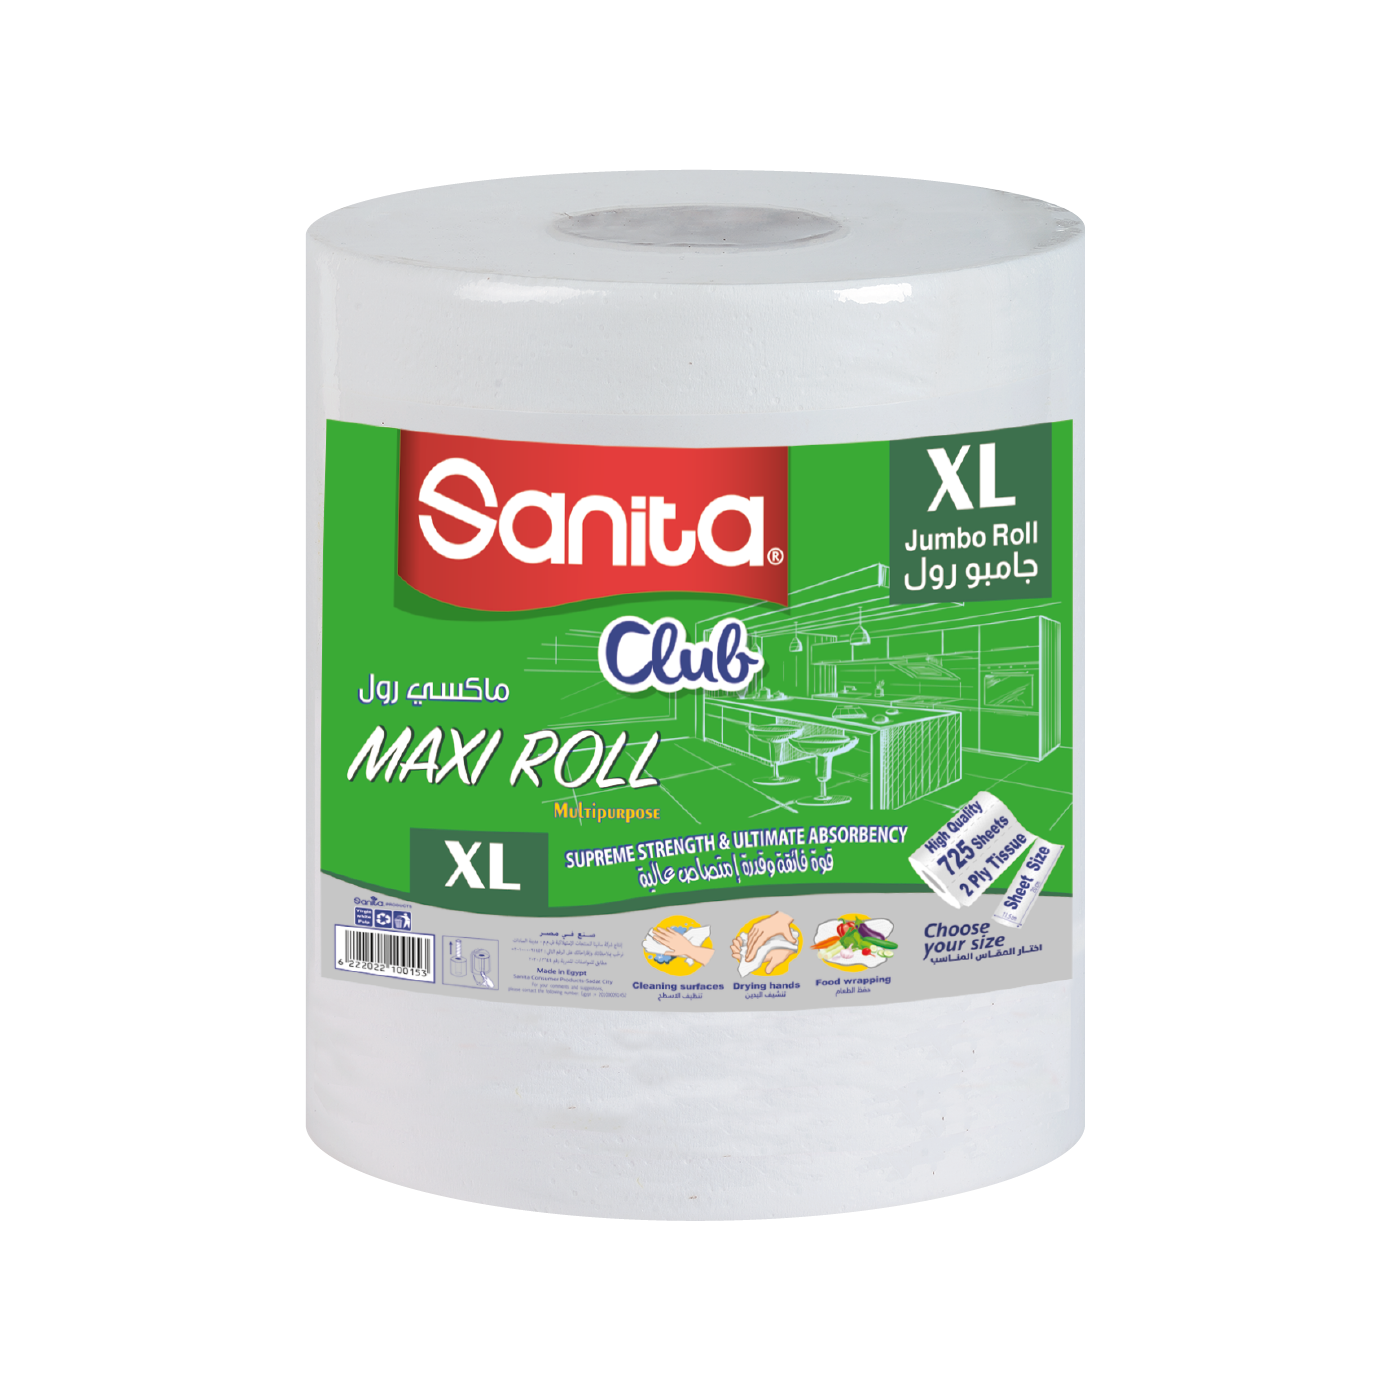 Sanita Club Maxi Roll XL 1 Roll